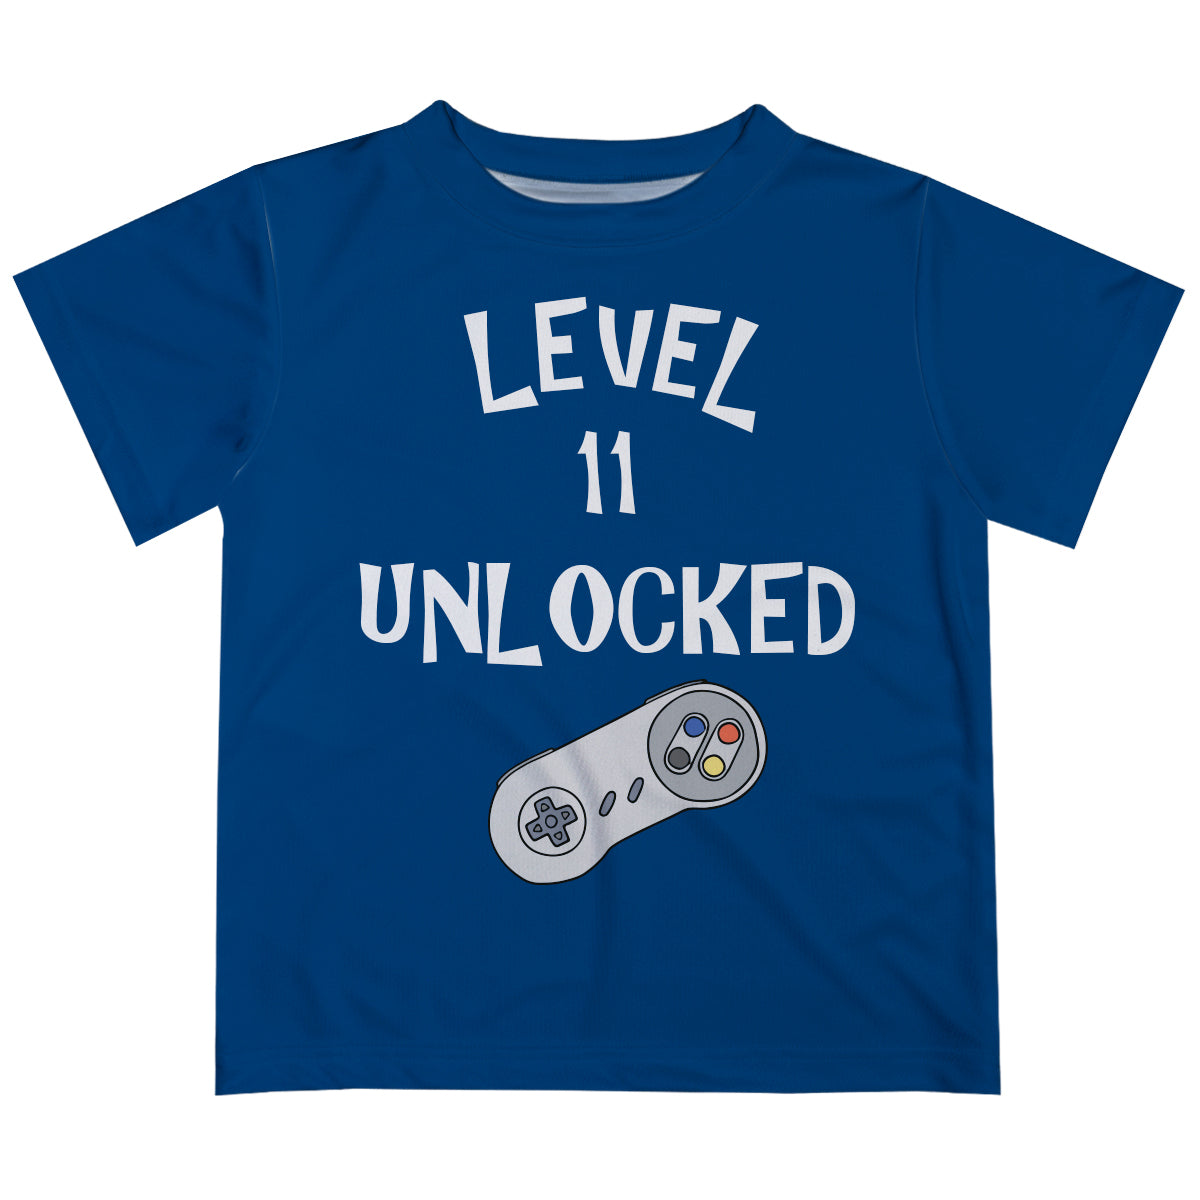 Level Your Age Unlocked Navy Short Sleeve Tee Shirt - Wimziy&Co.